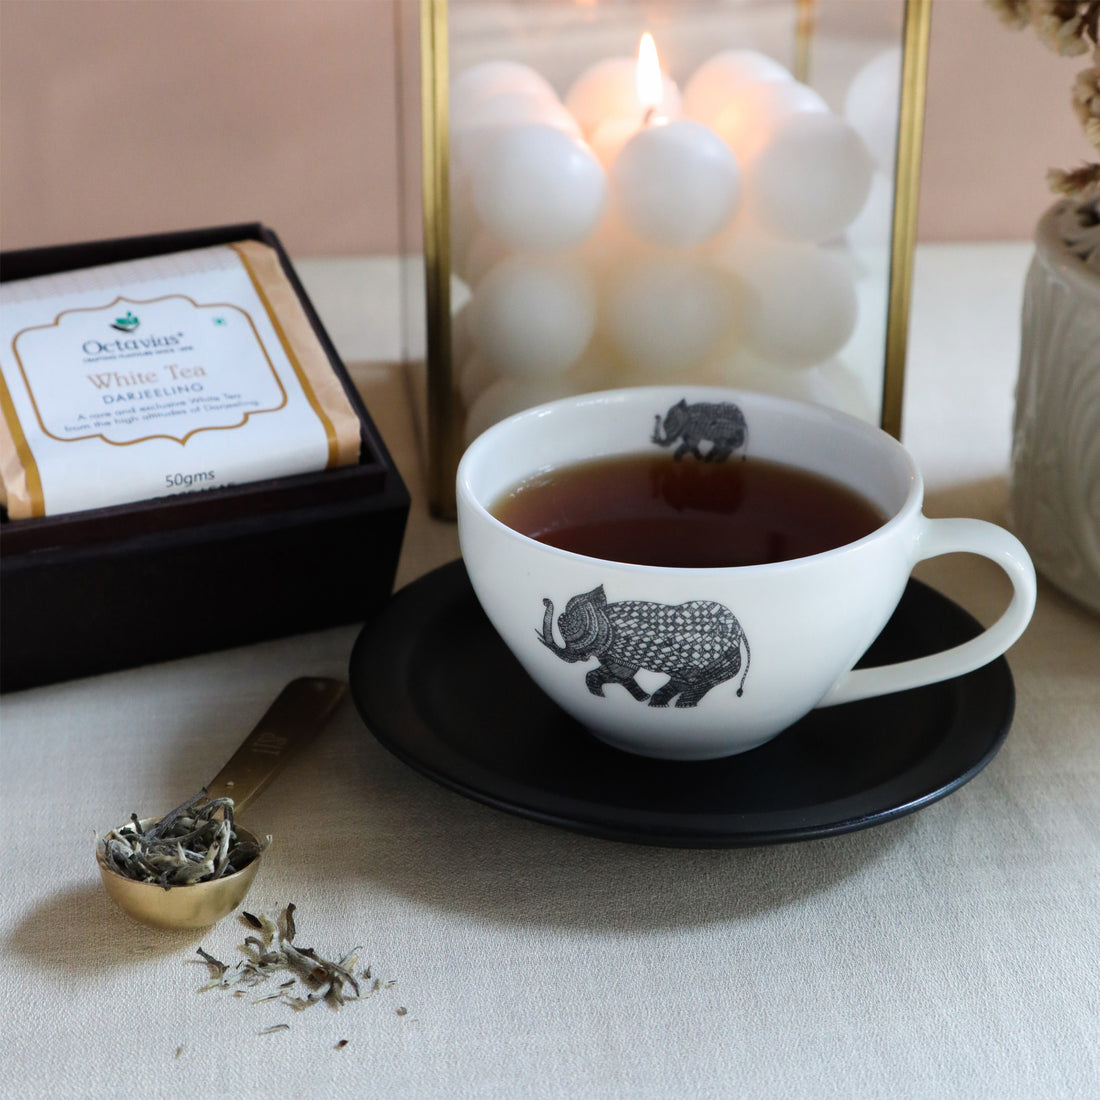 Darjeeling White Tea in Handcrafted Wooden Box